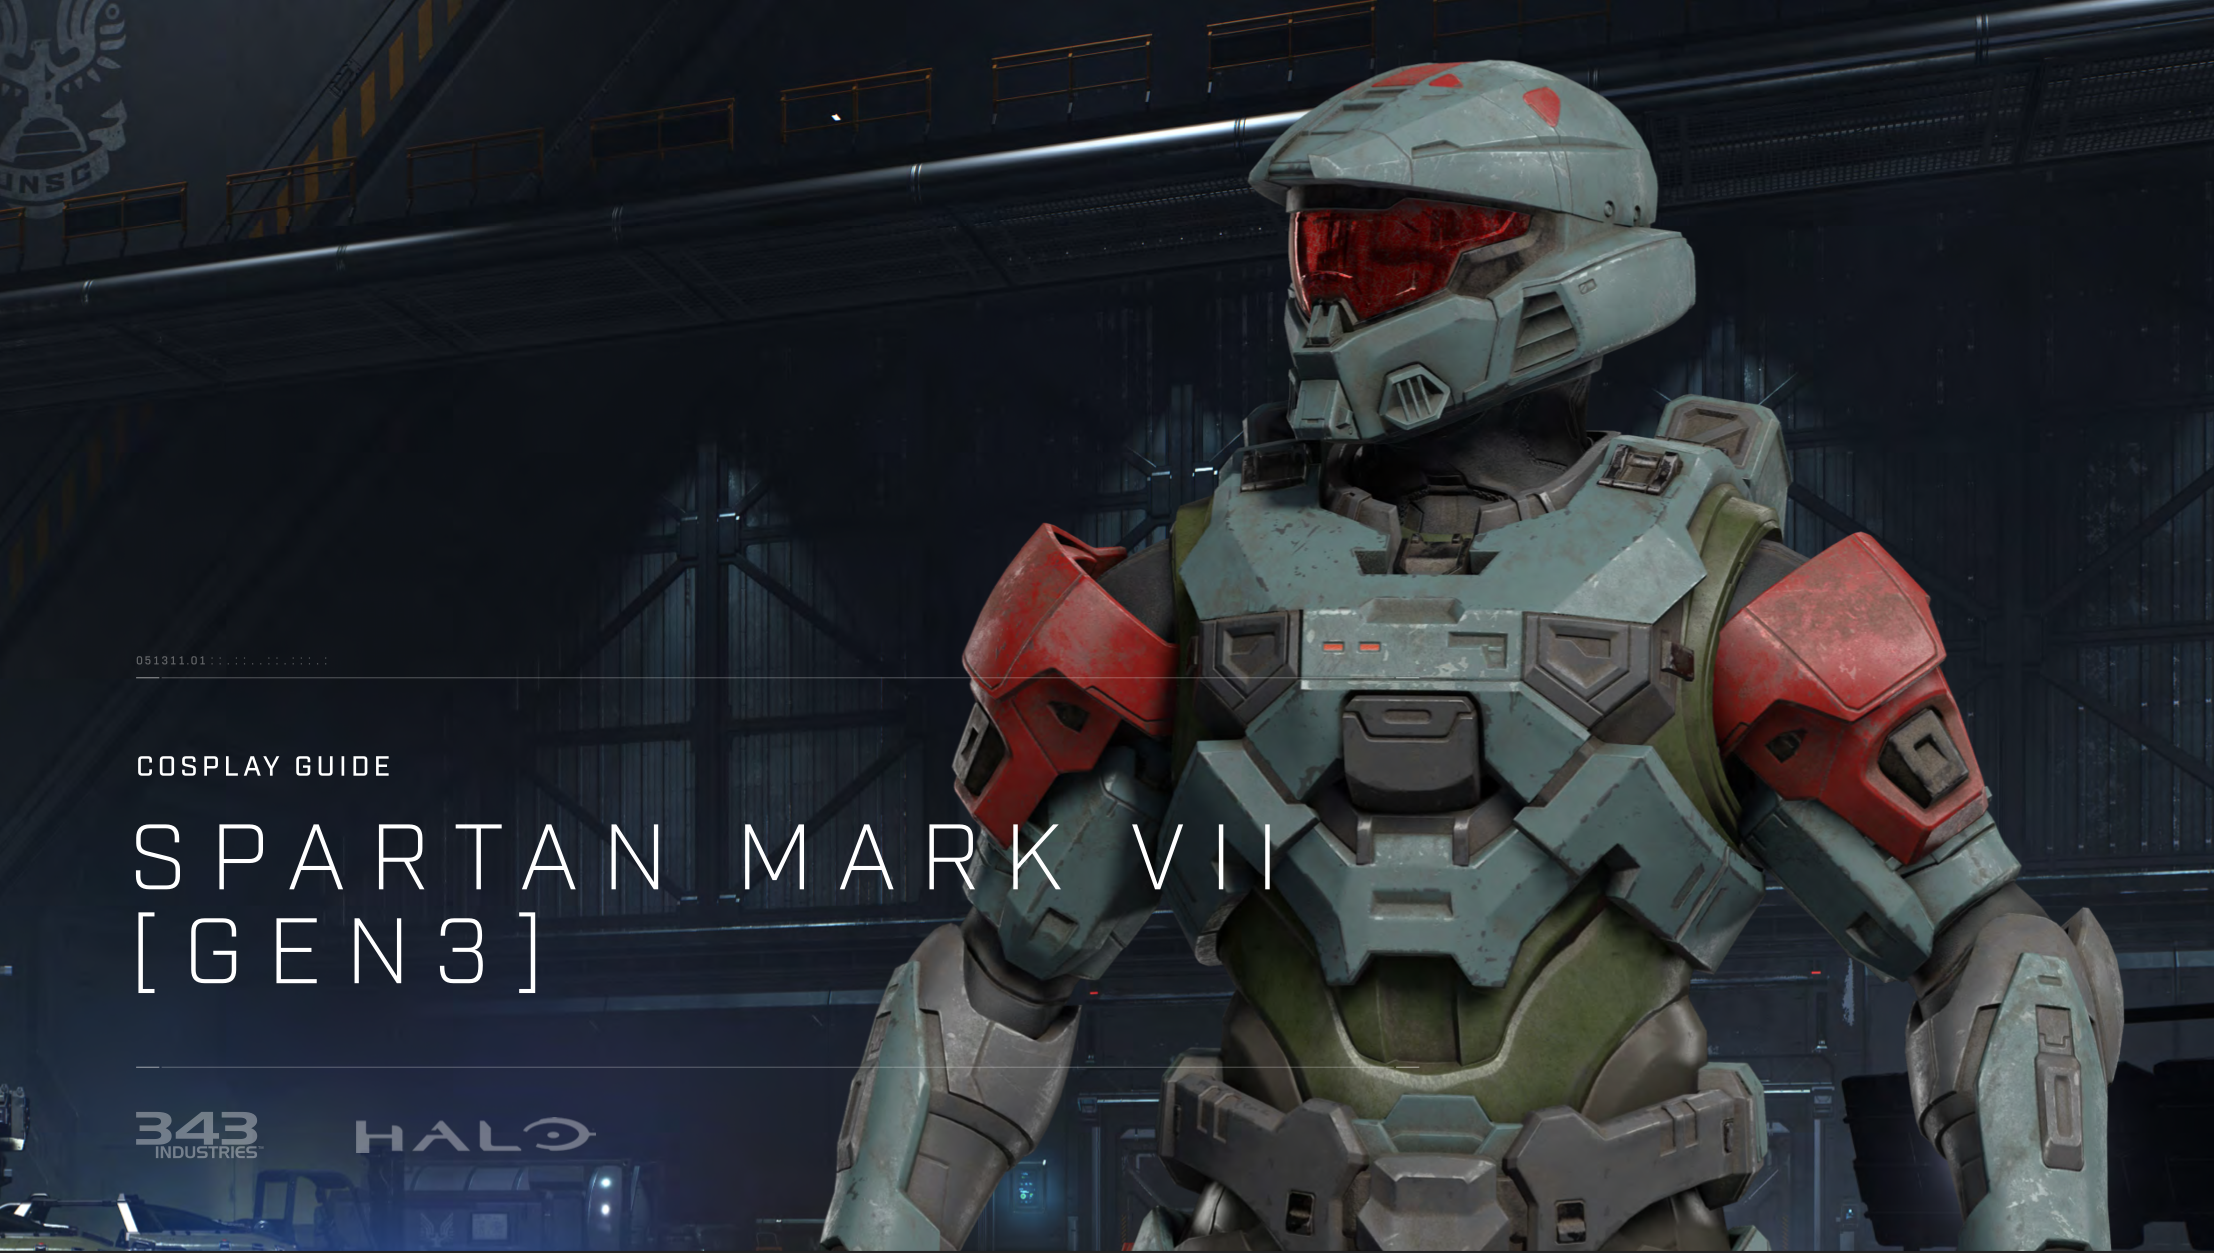 Halo Infinite Spartan Mark VII Gen 3 cosyplay suit